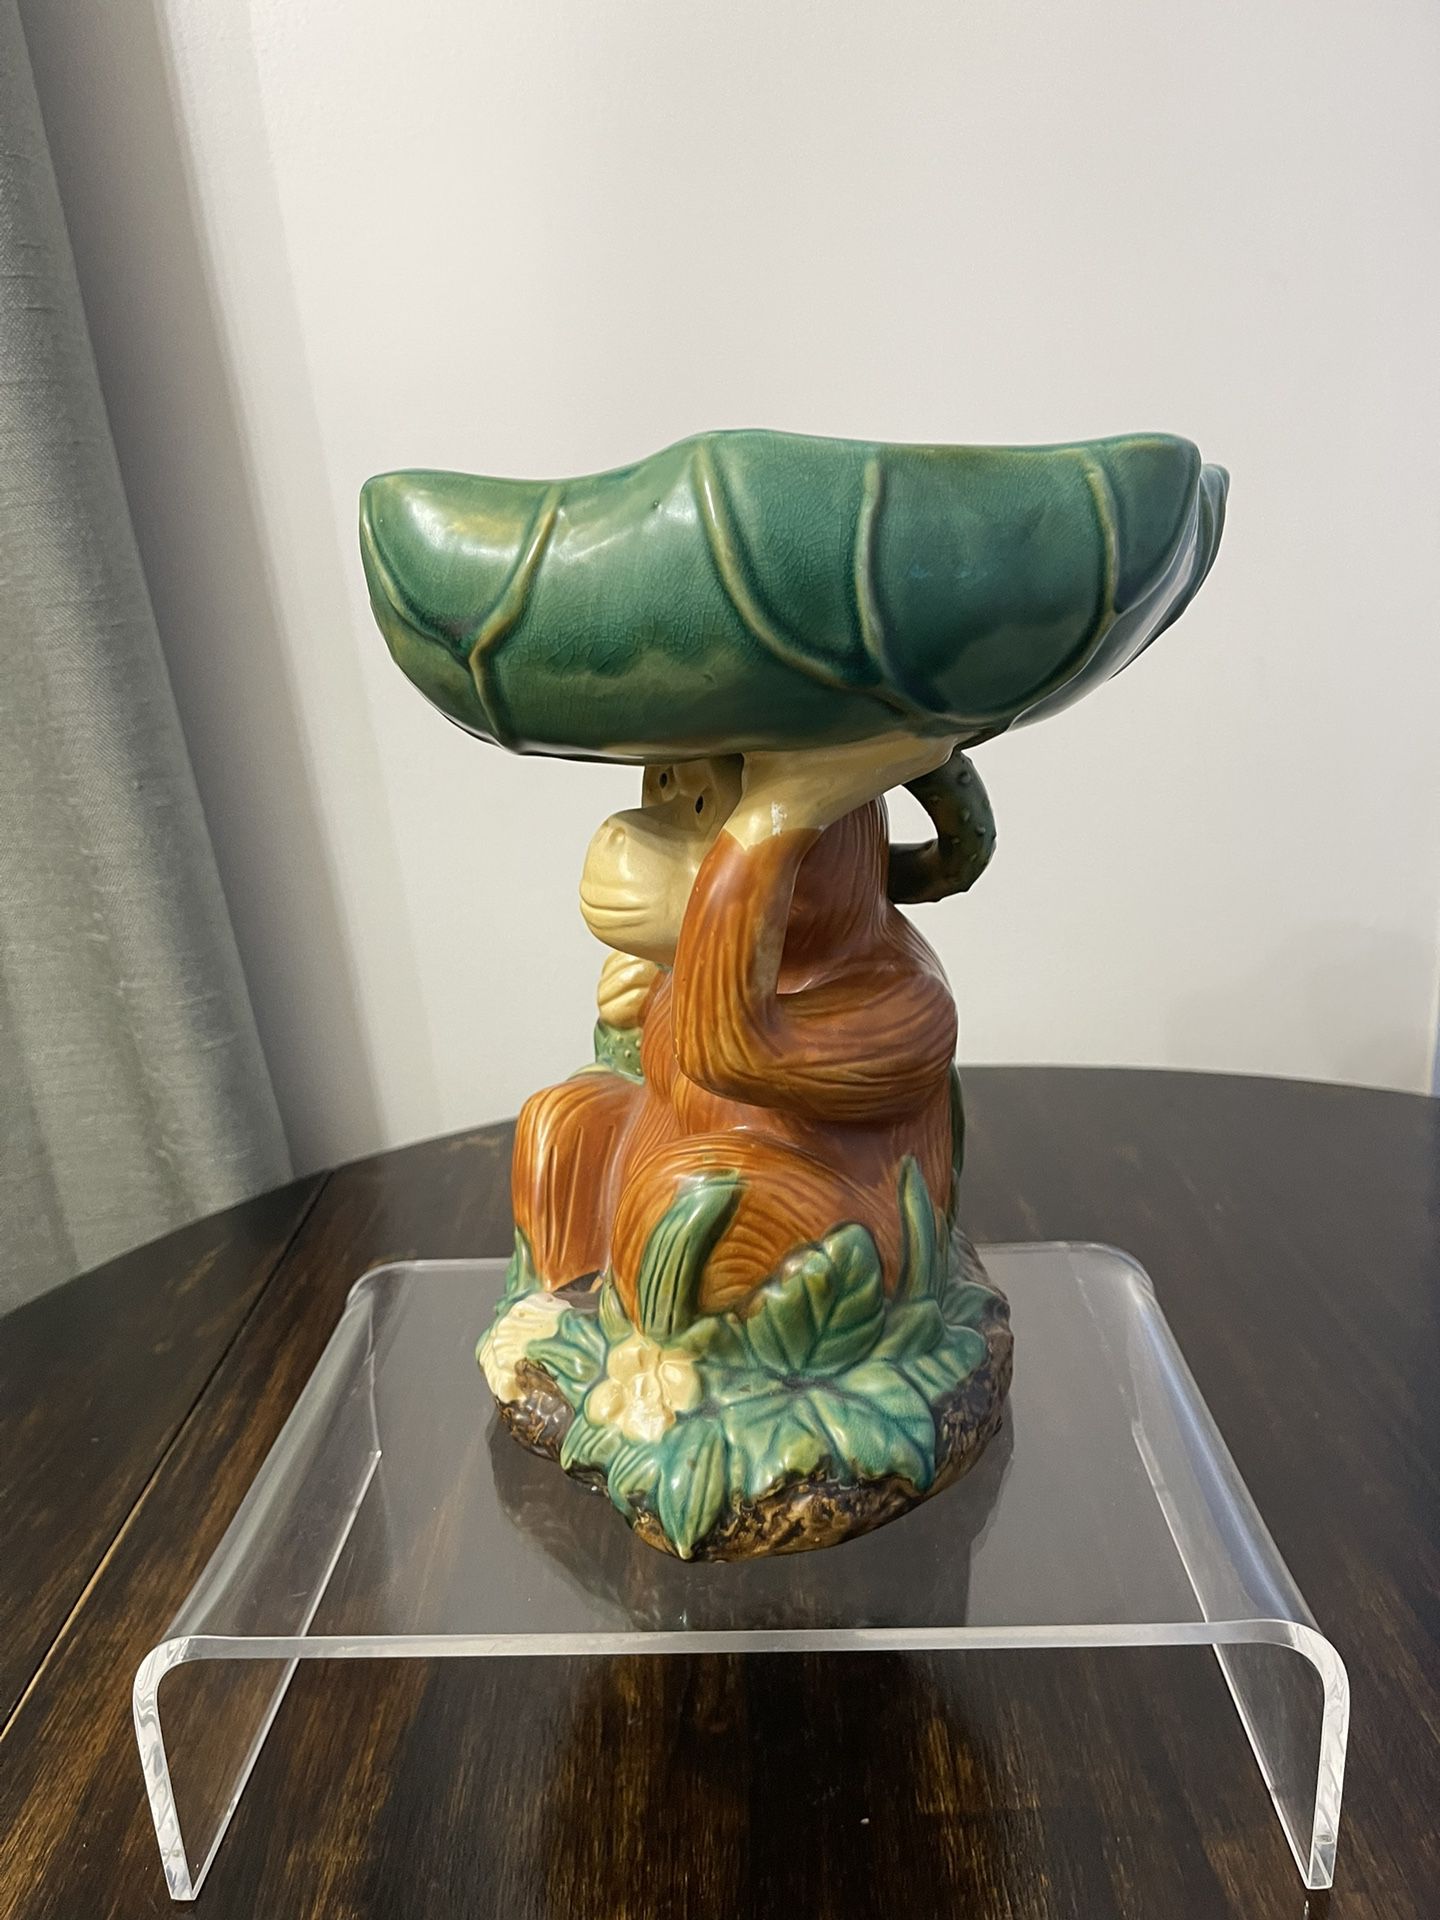  Ceramic Monkey with Bowl on Head